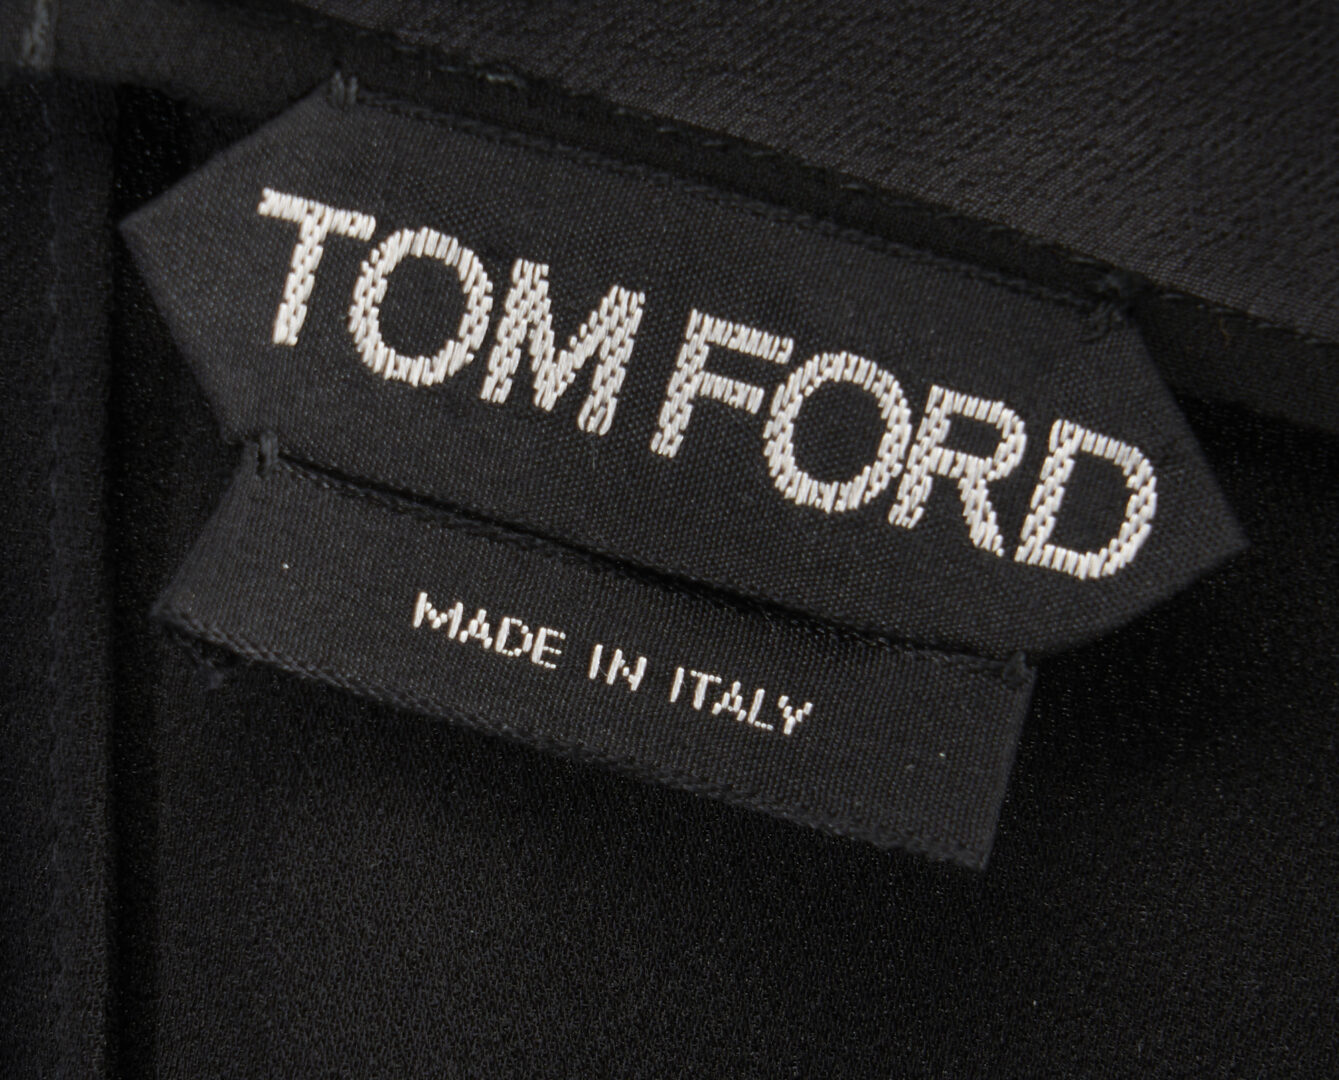 Lot 1199: 3 Tom Ford Business Wear Garments